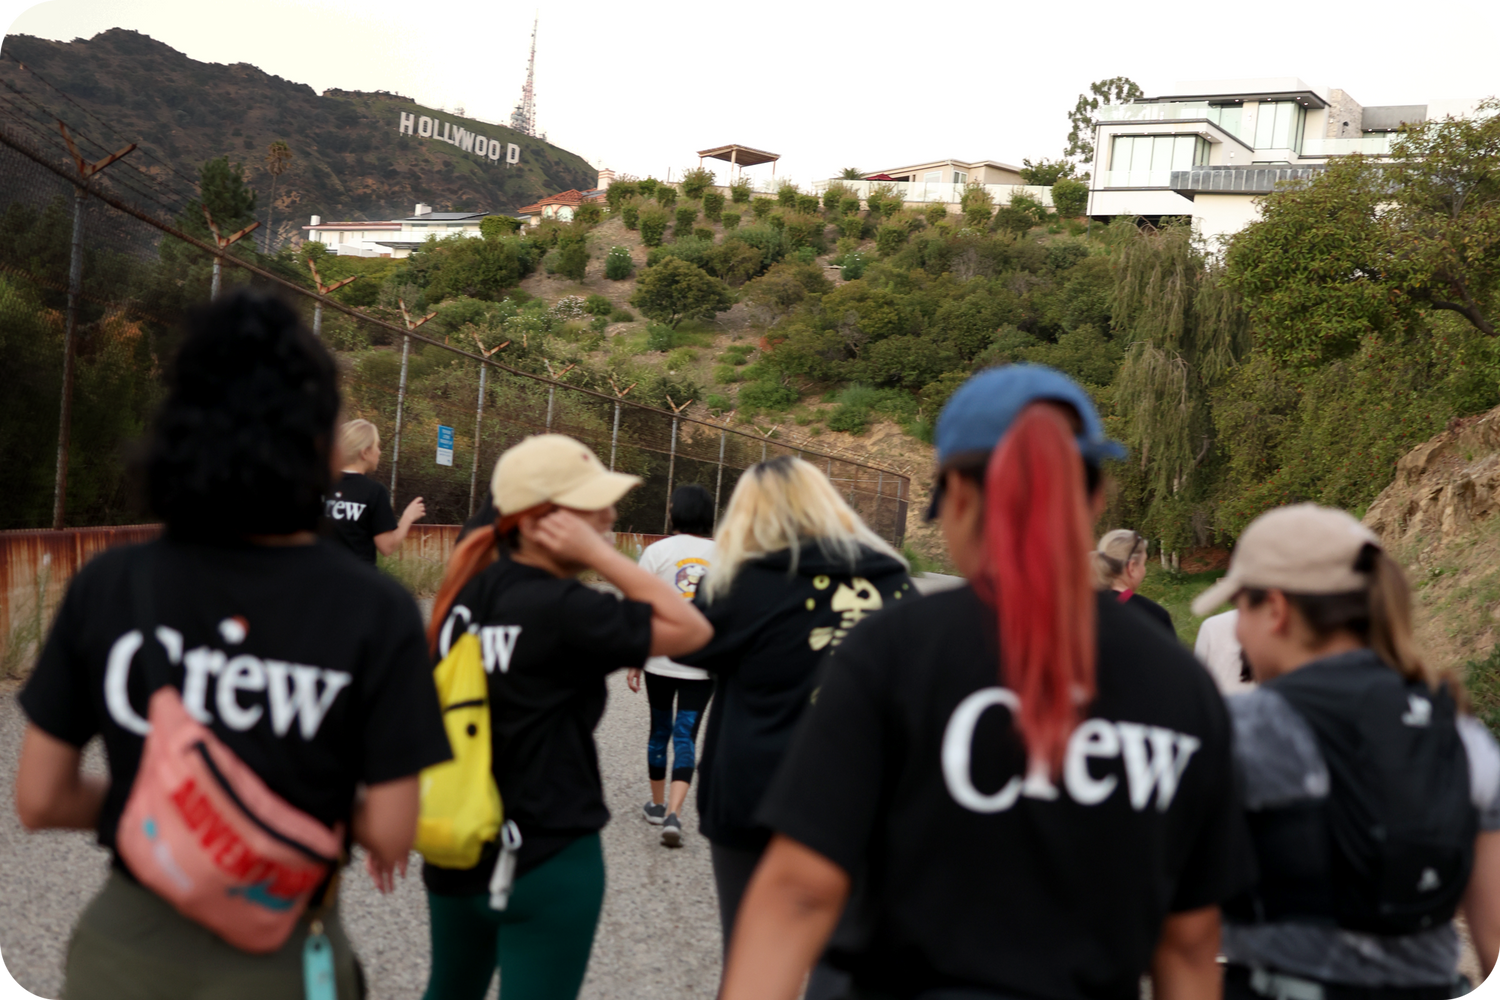 Wondery Hike Crew Hollywood Hills Event